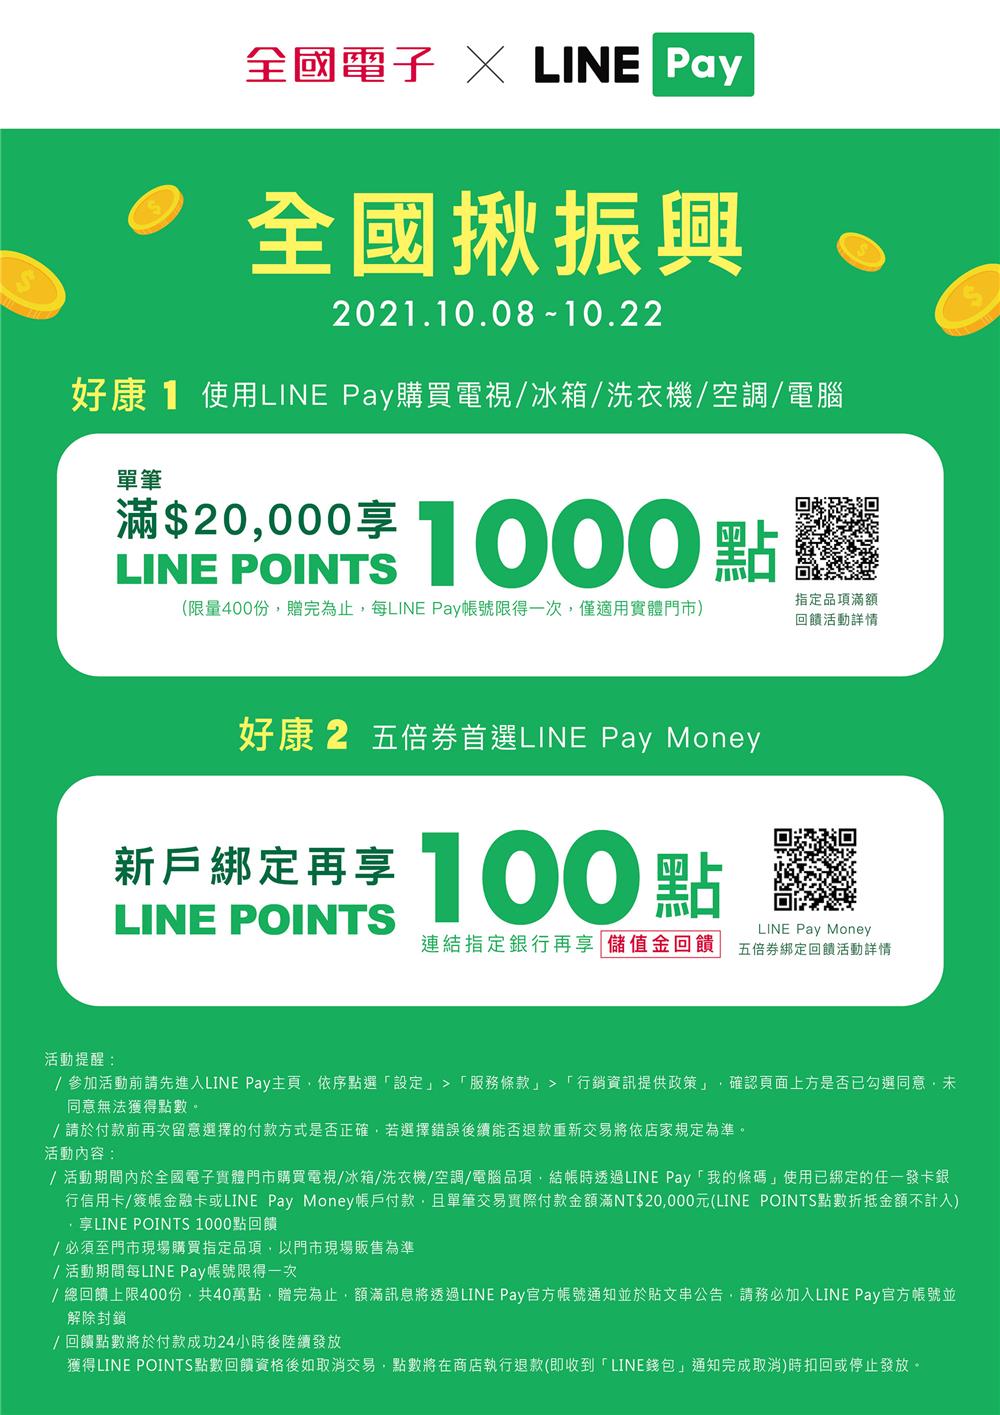 全國電子LINE Pay滿額享LINE POINTS 1000點